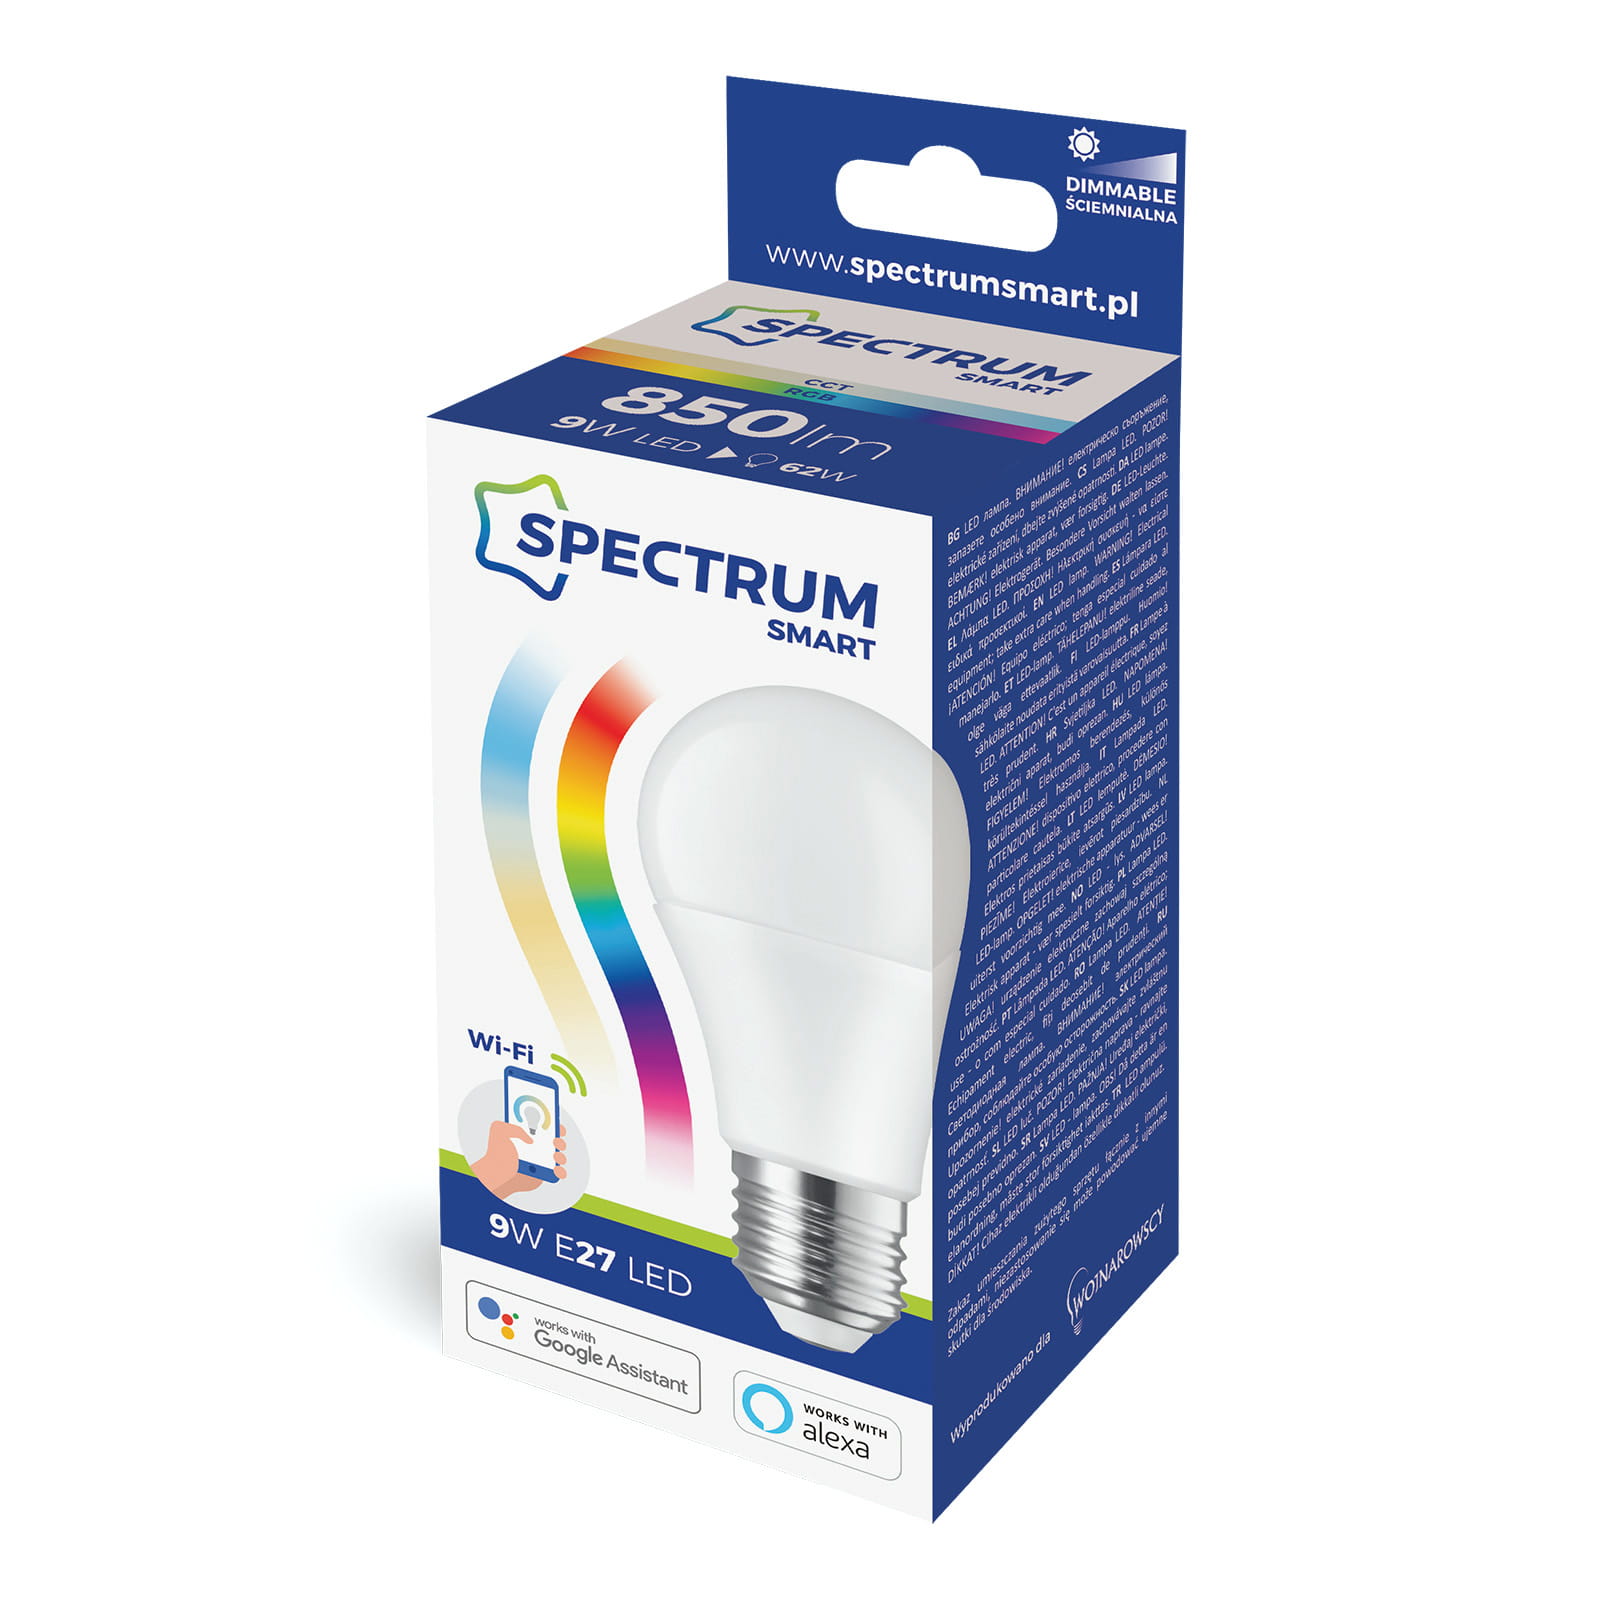 Spectrum® Smart Home LED 220º, 60W Leuchtmittel Winkel 9W Sockel = dimmbar, E27